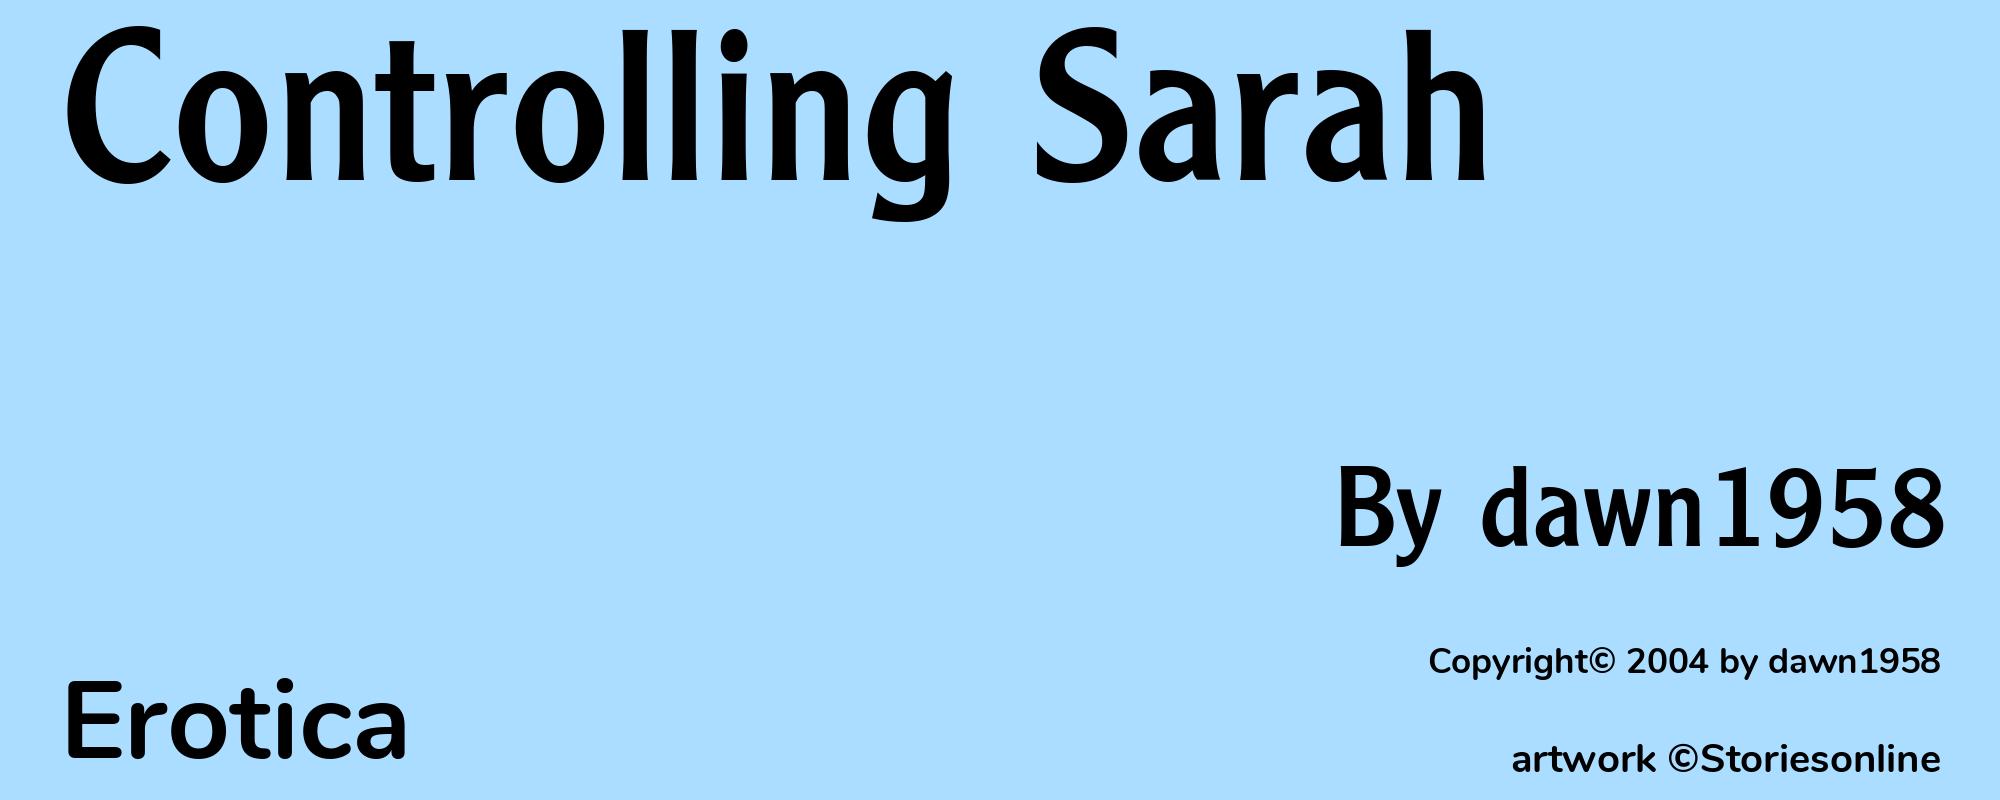 Controlling Sarah - Cover